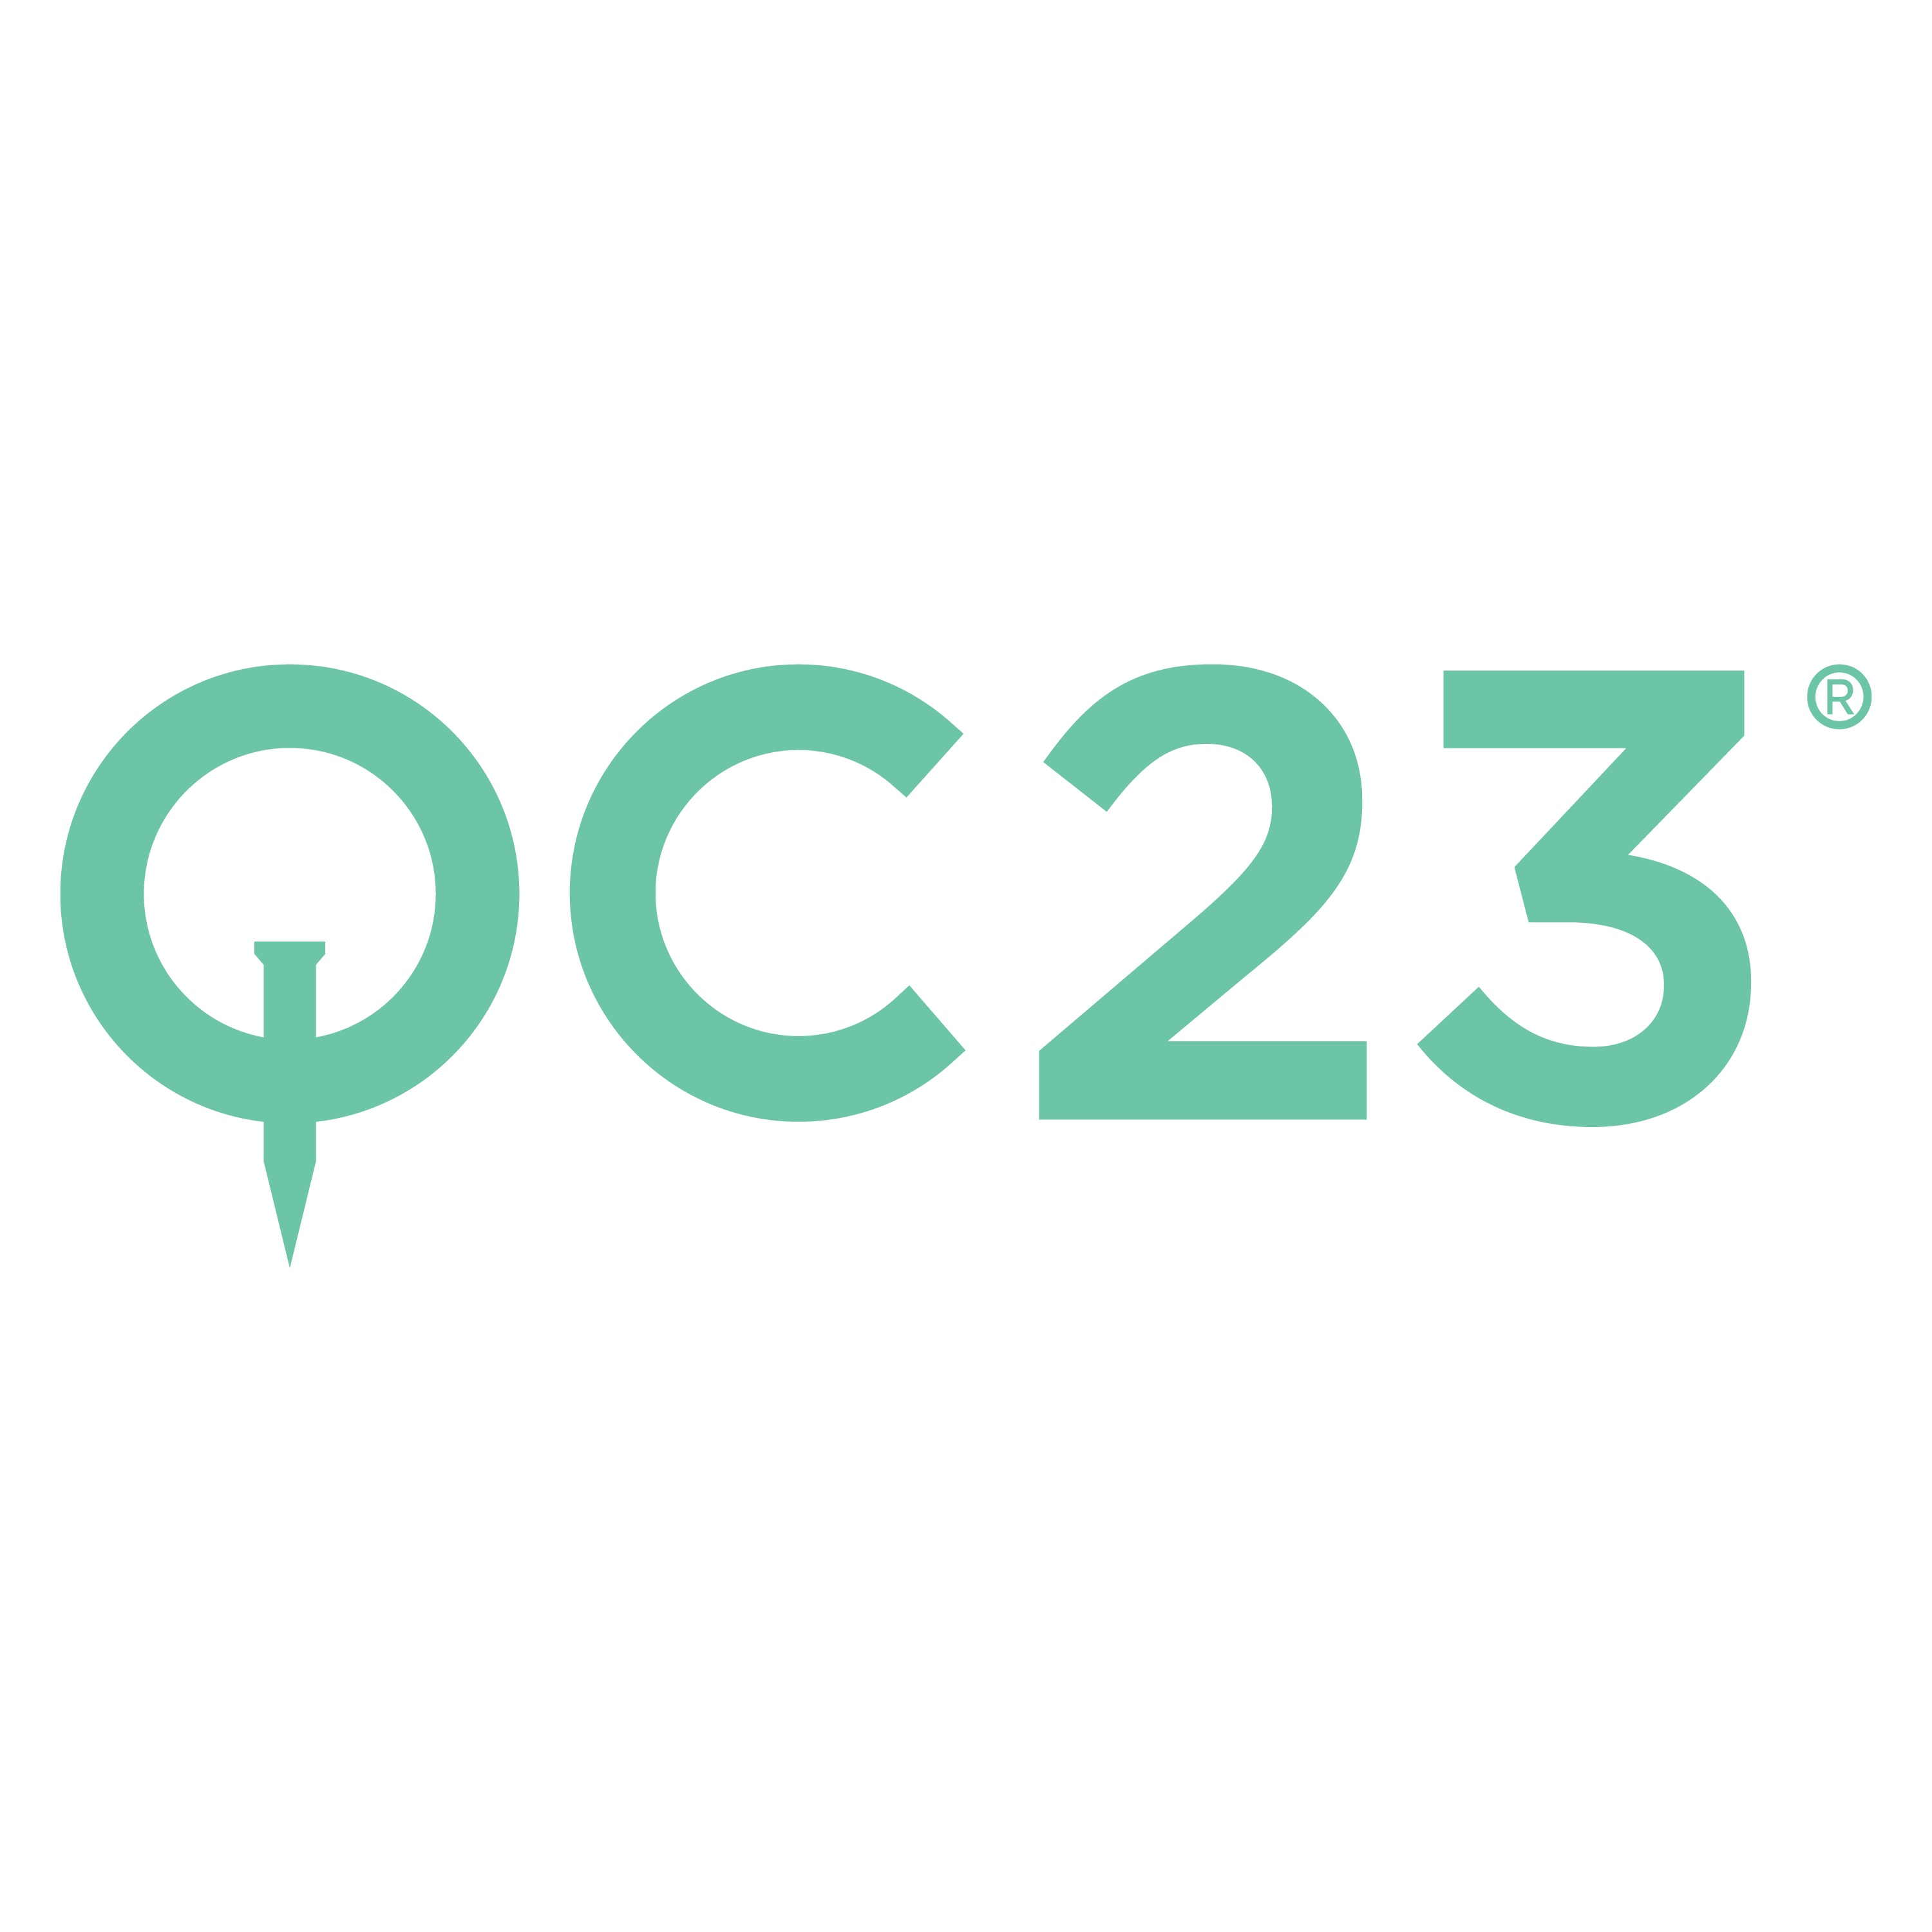 QC QC23 teal